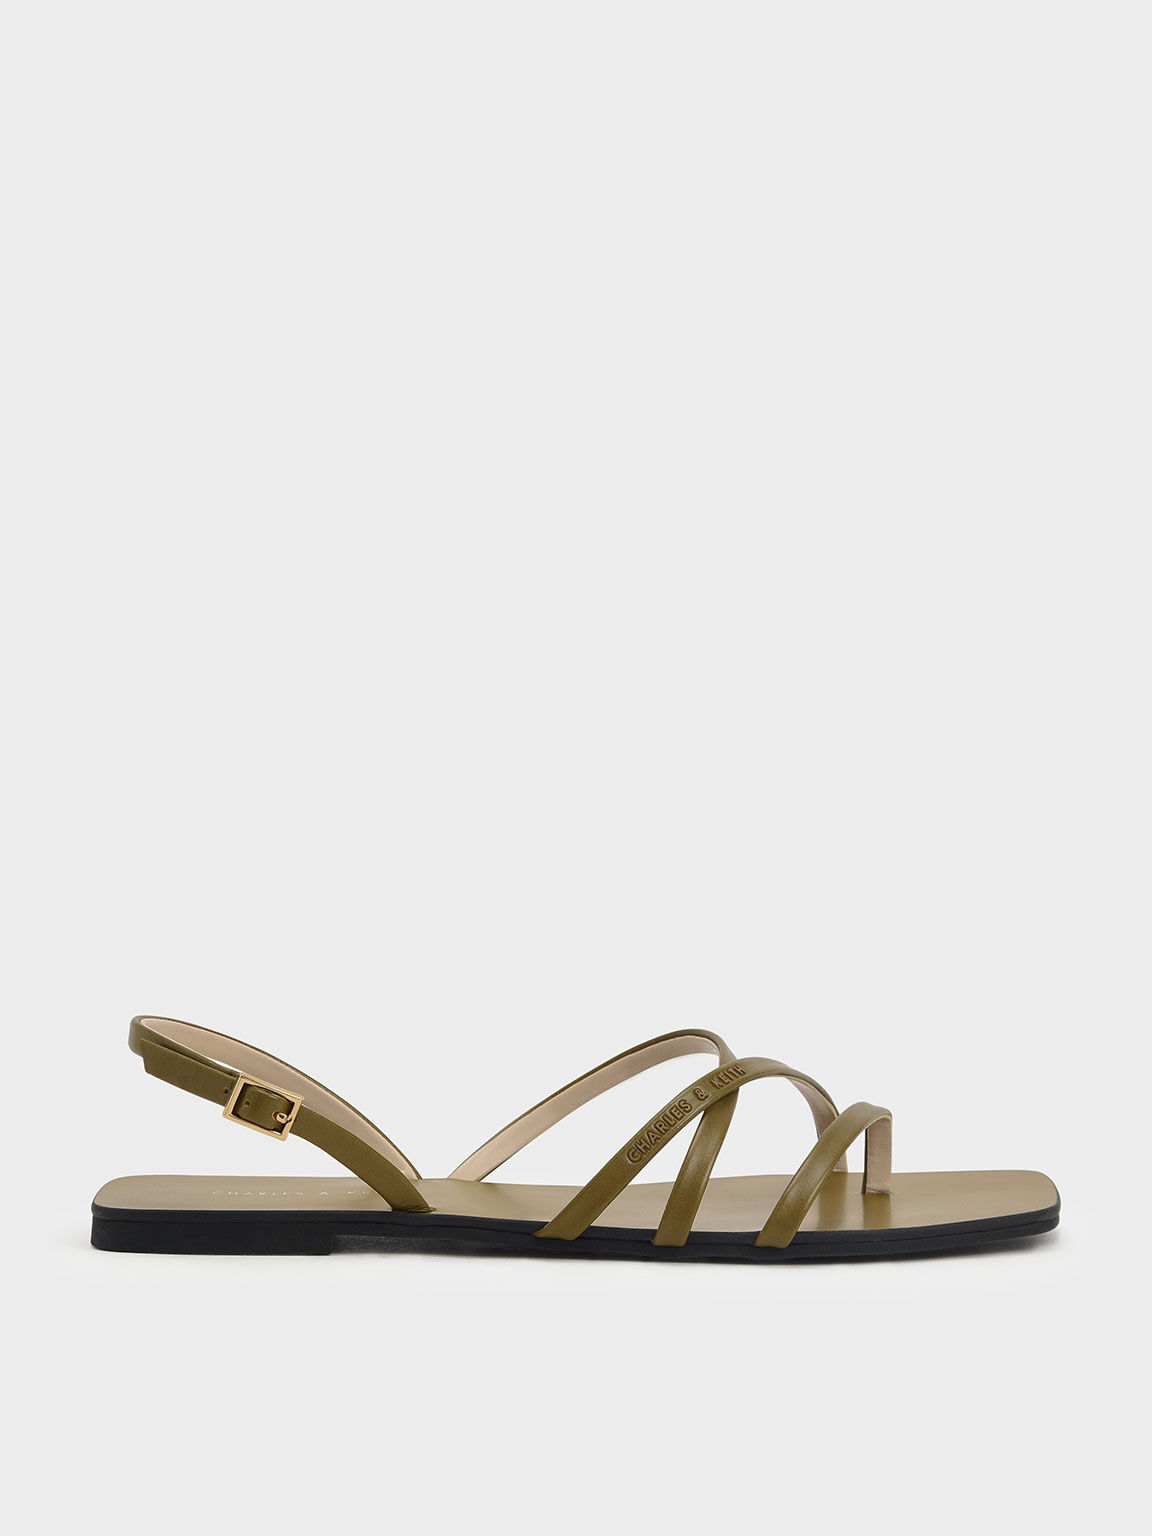 Strappy Square-Toe Slingback Sandals, Olive, hi-res